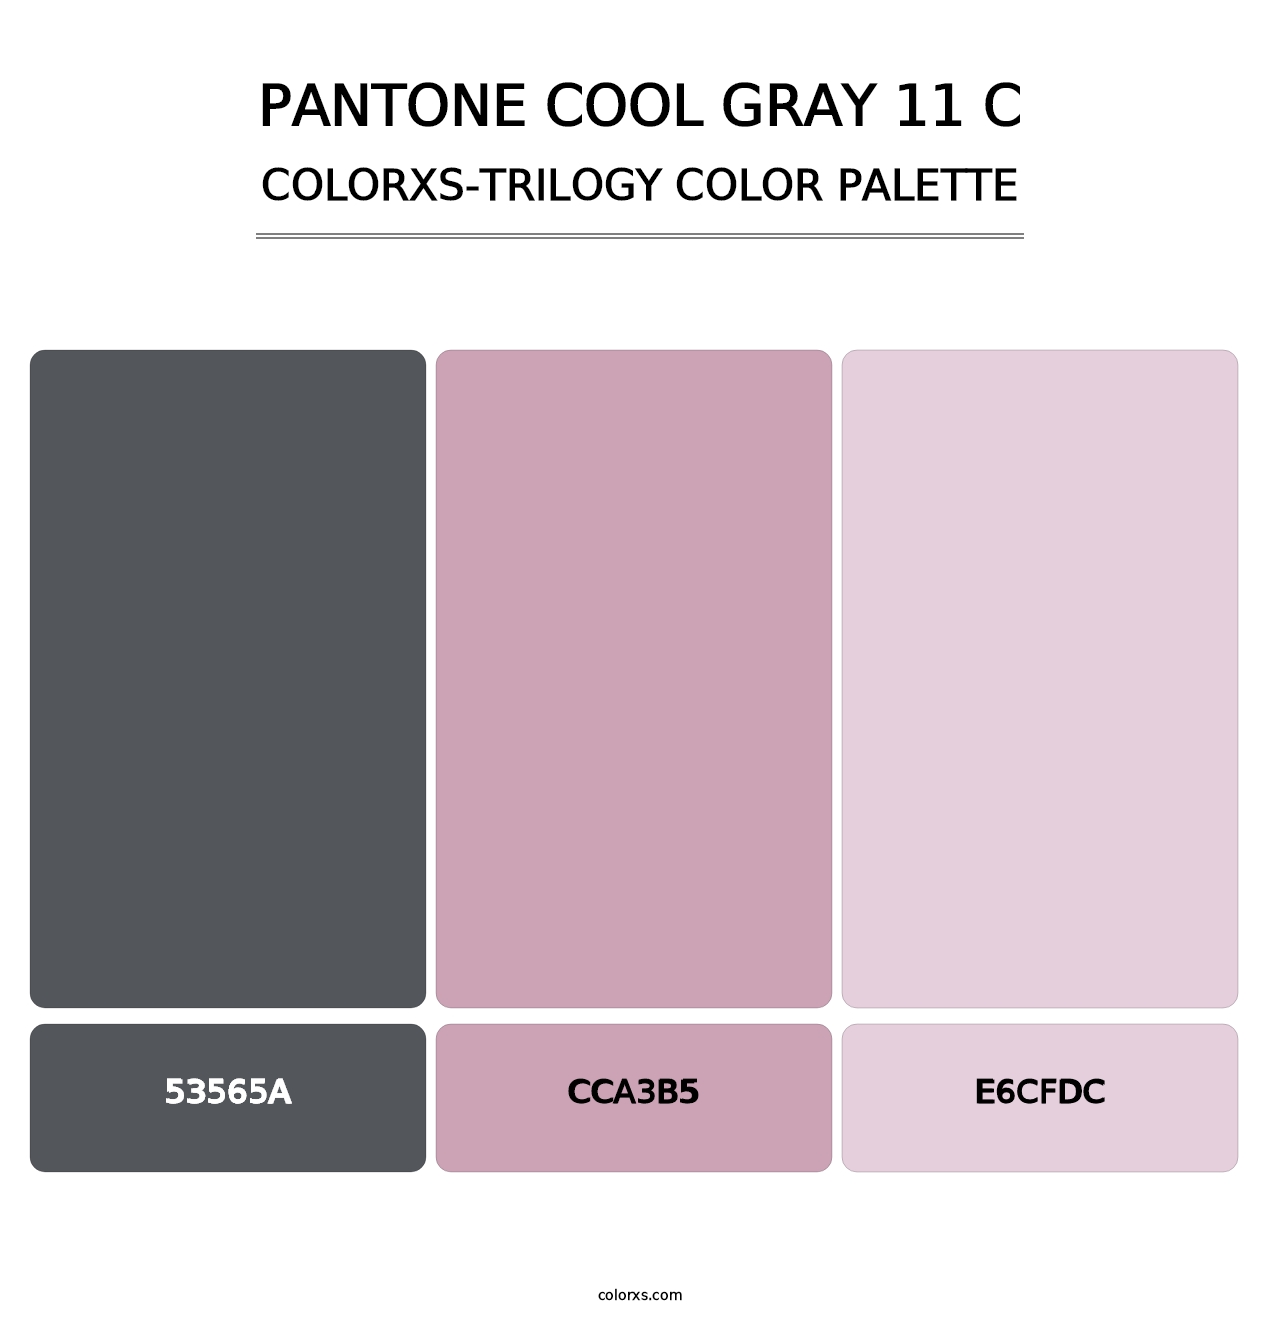 PANTONE Cool Gray 11 C - Colorxs Trilogy Palette